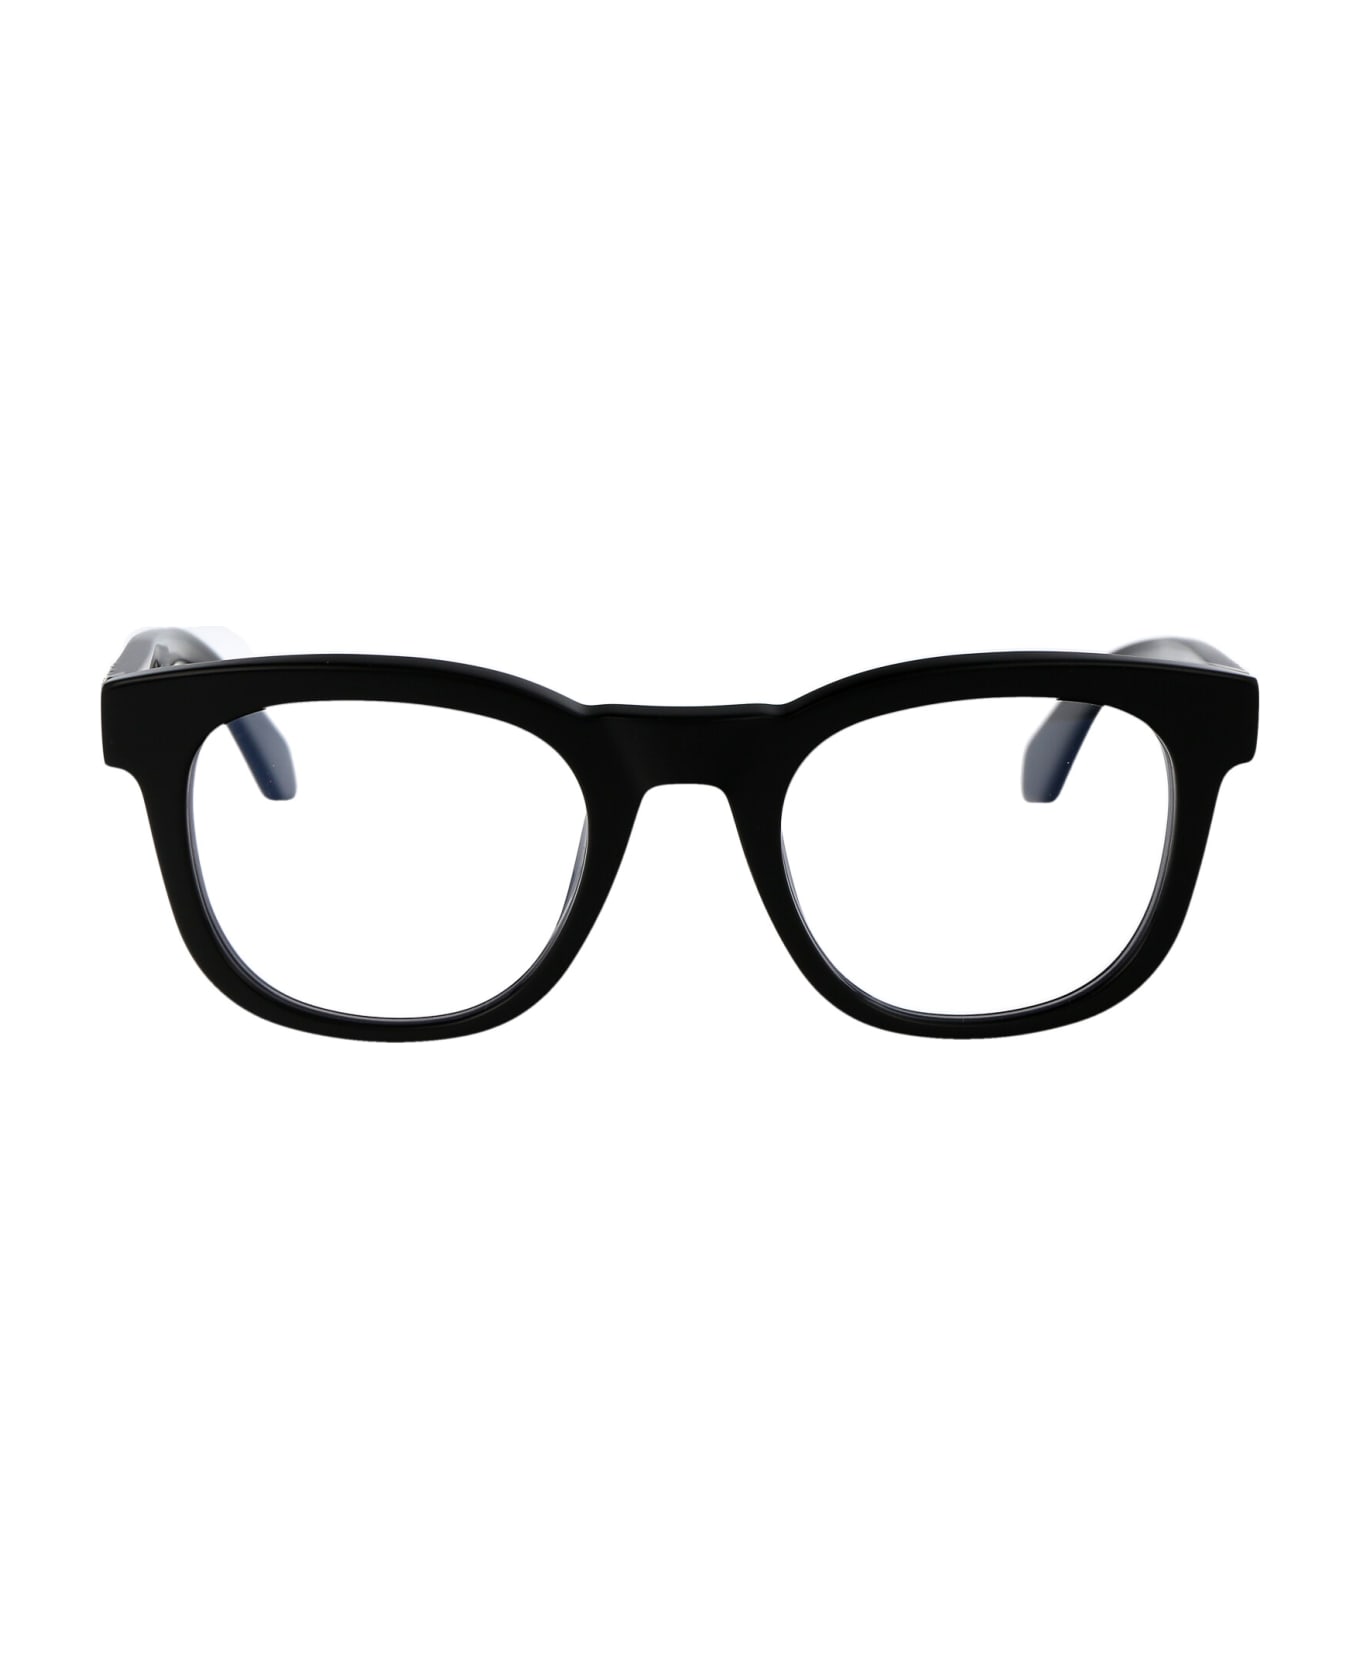 Off-White Optical Style 71 Glasses - 1000 BLACK